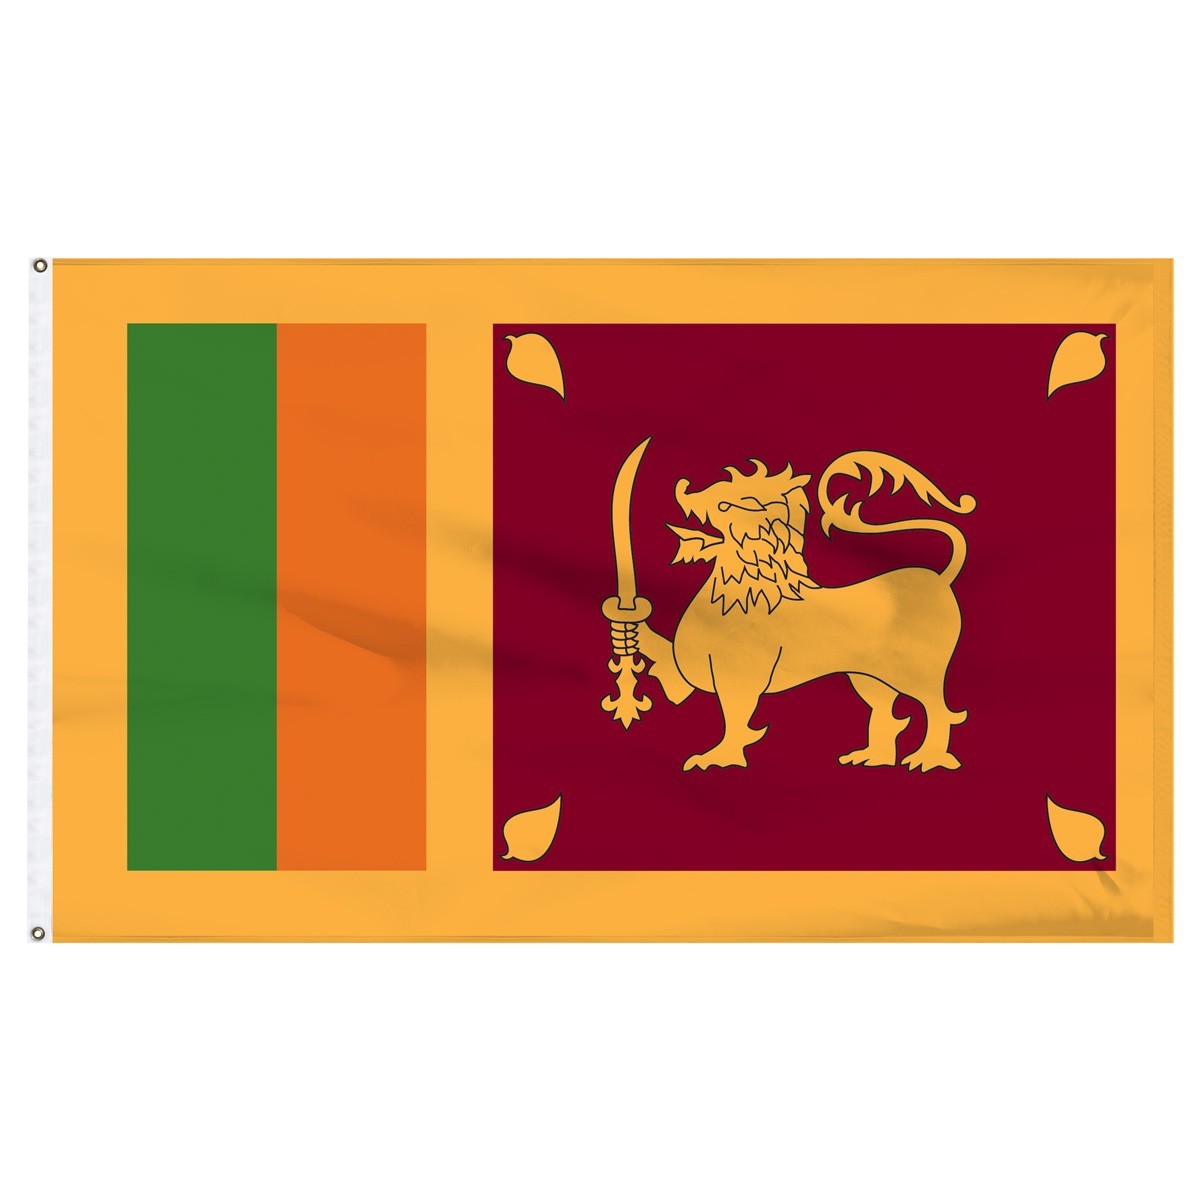 Sri Lanka 5' x 8' Outdoor Nylon Flag